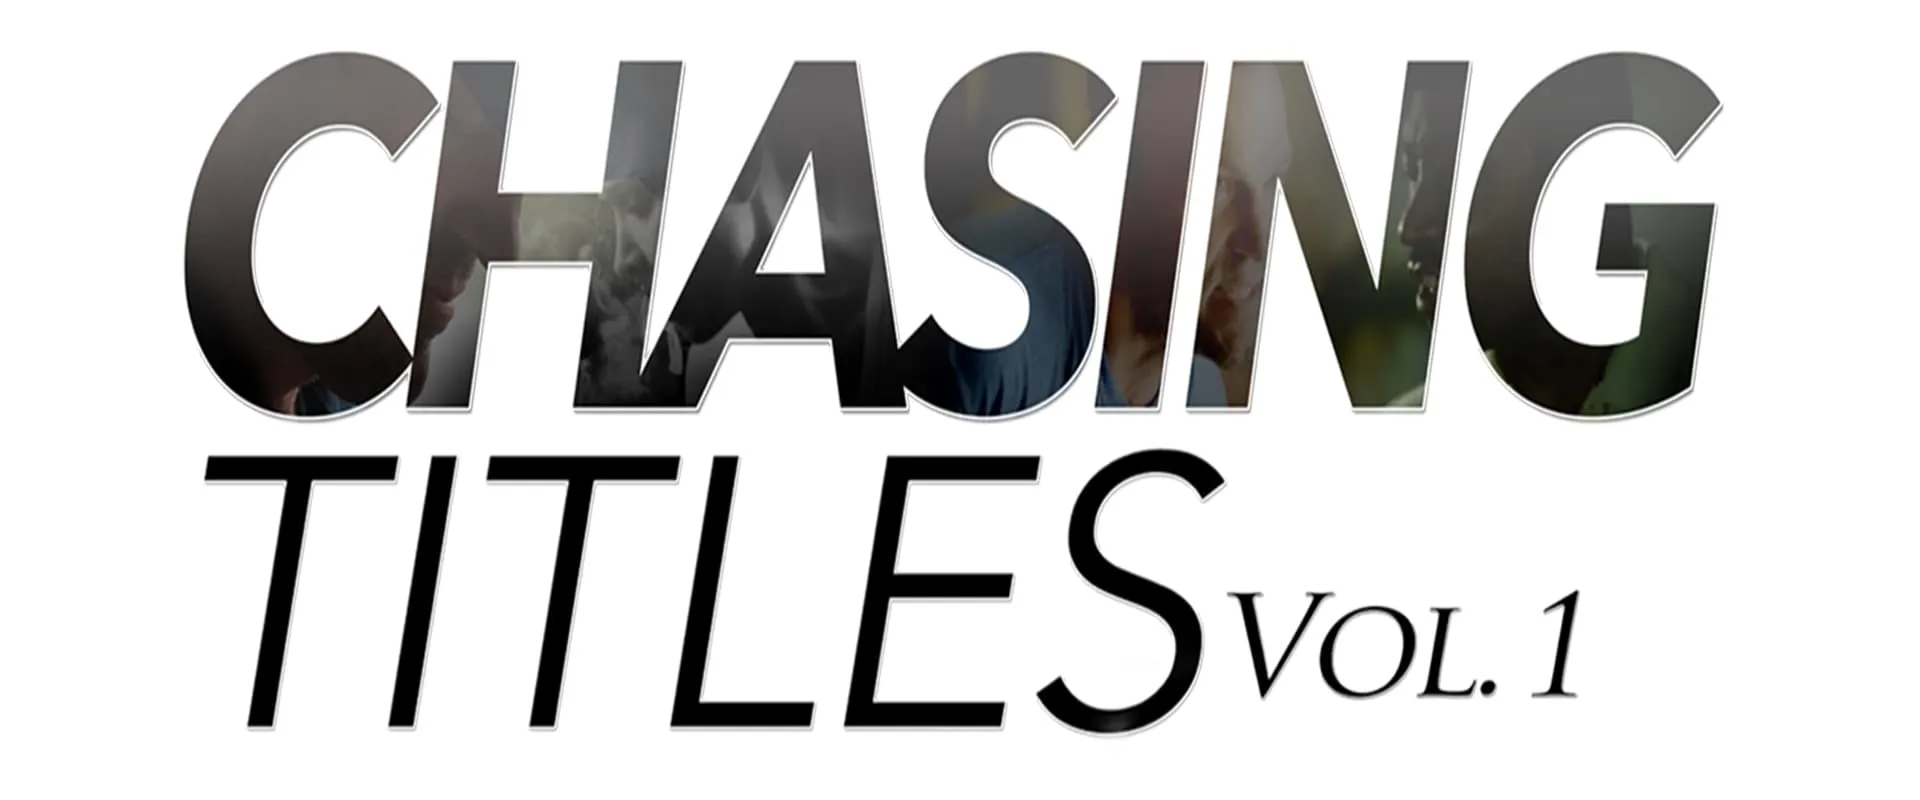 Chasing Titles Vol. 1 (2017)